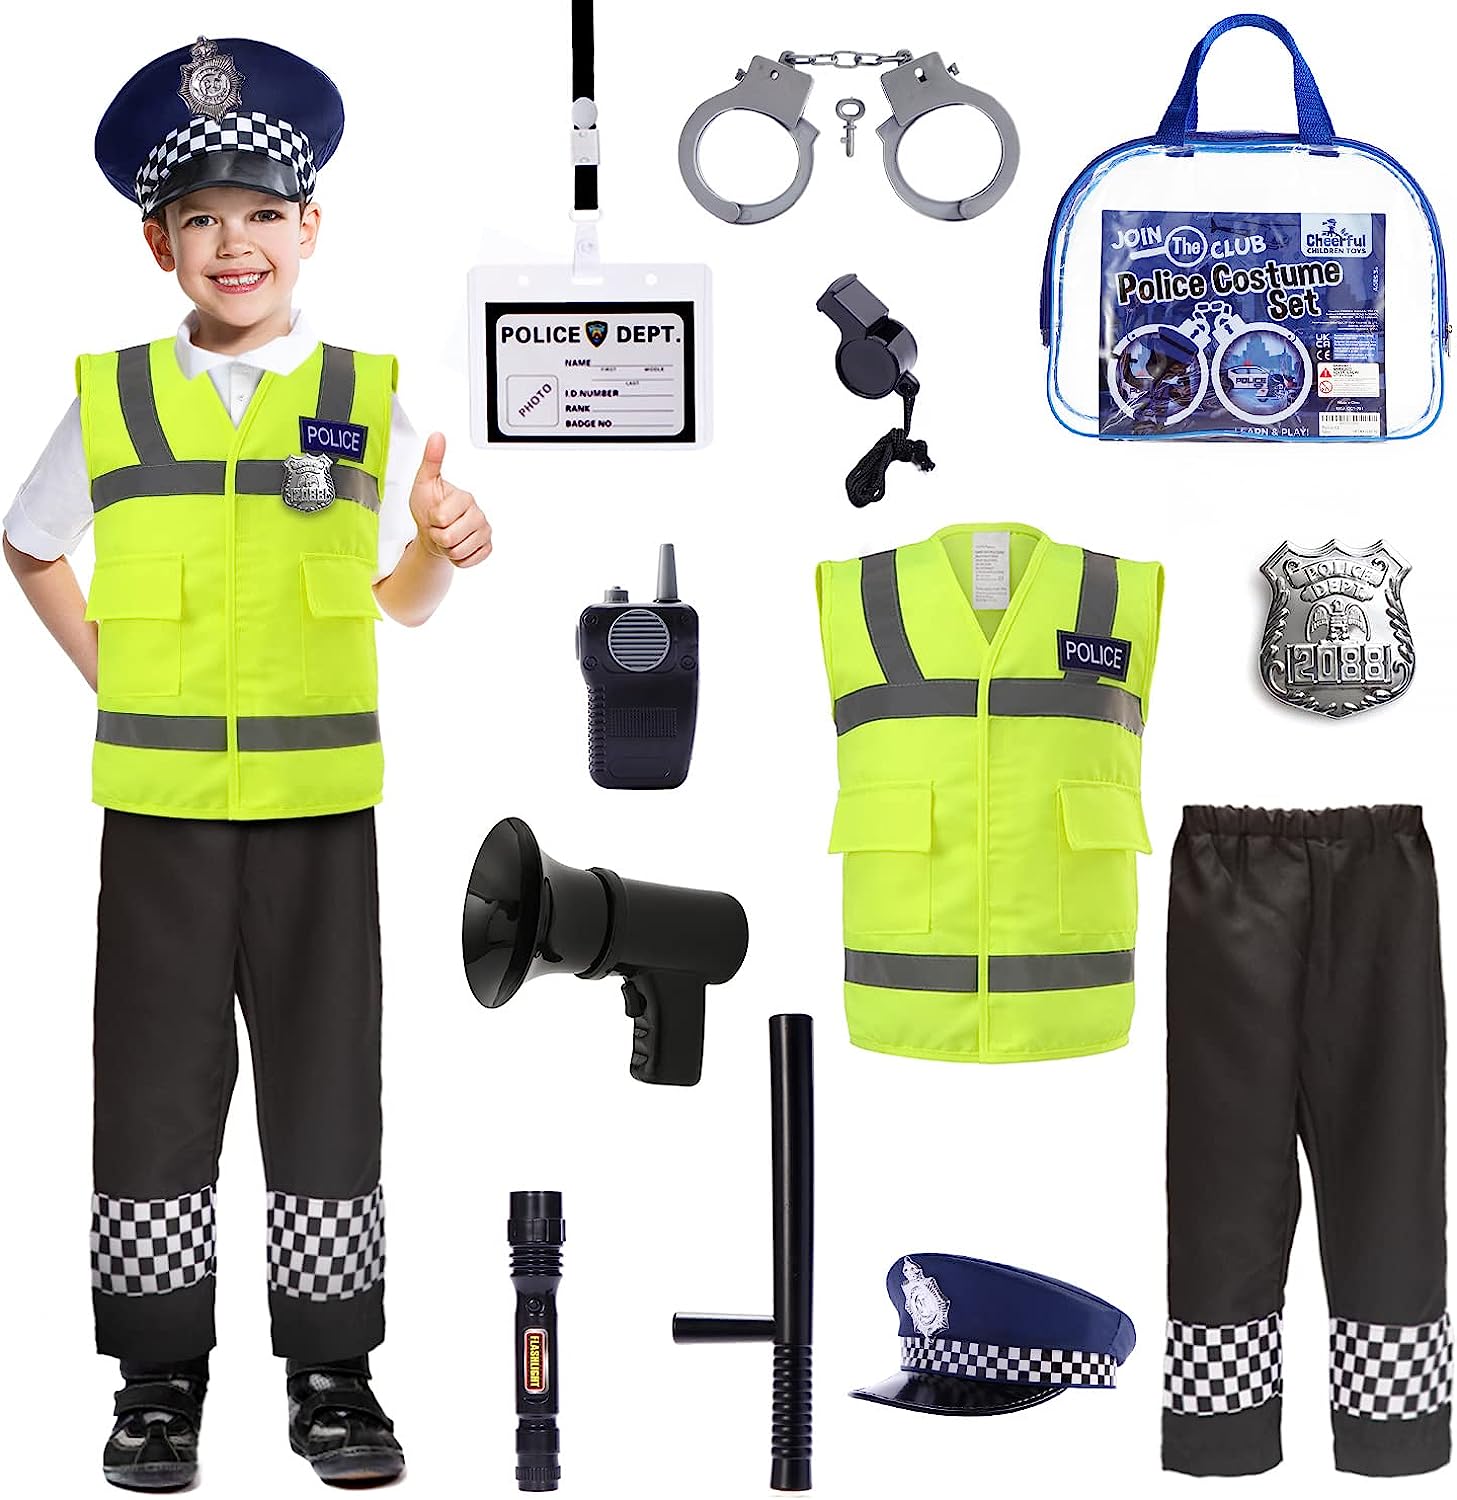 Police Officer Costume For Kids